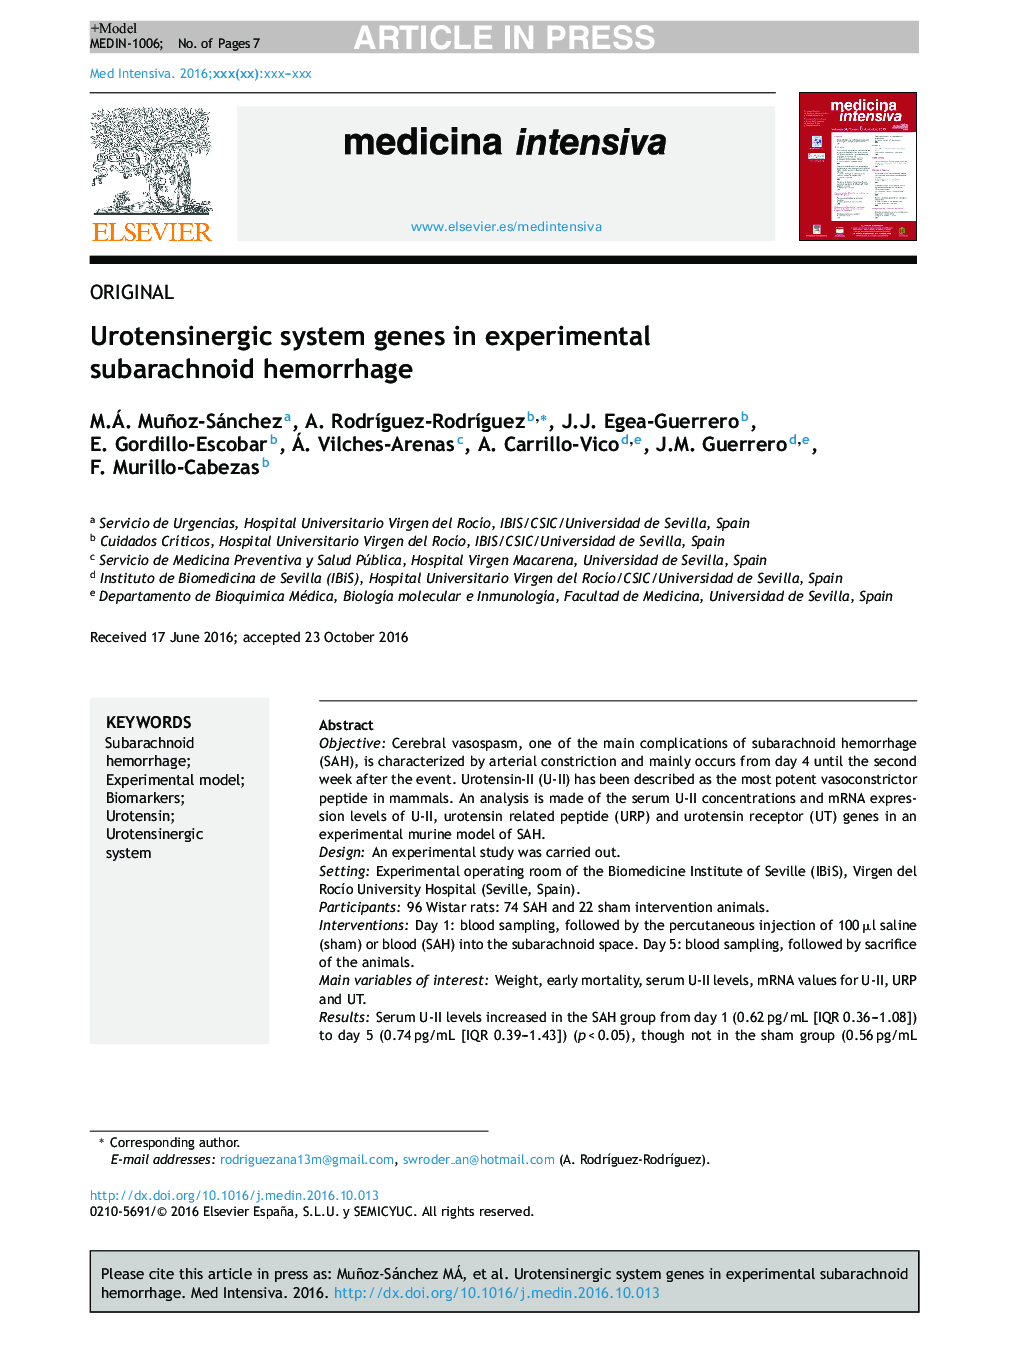 Urotensinergic system genes in experimental subarachnoid hemorrhage